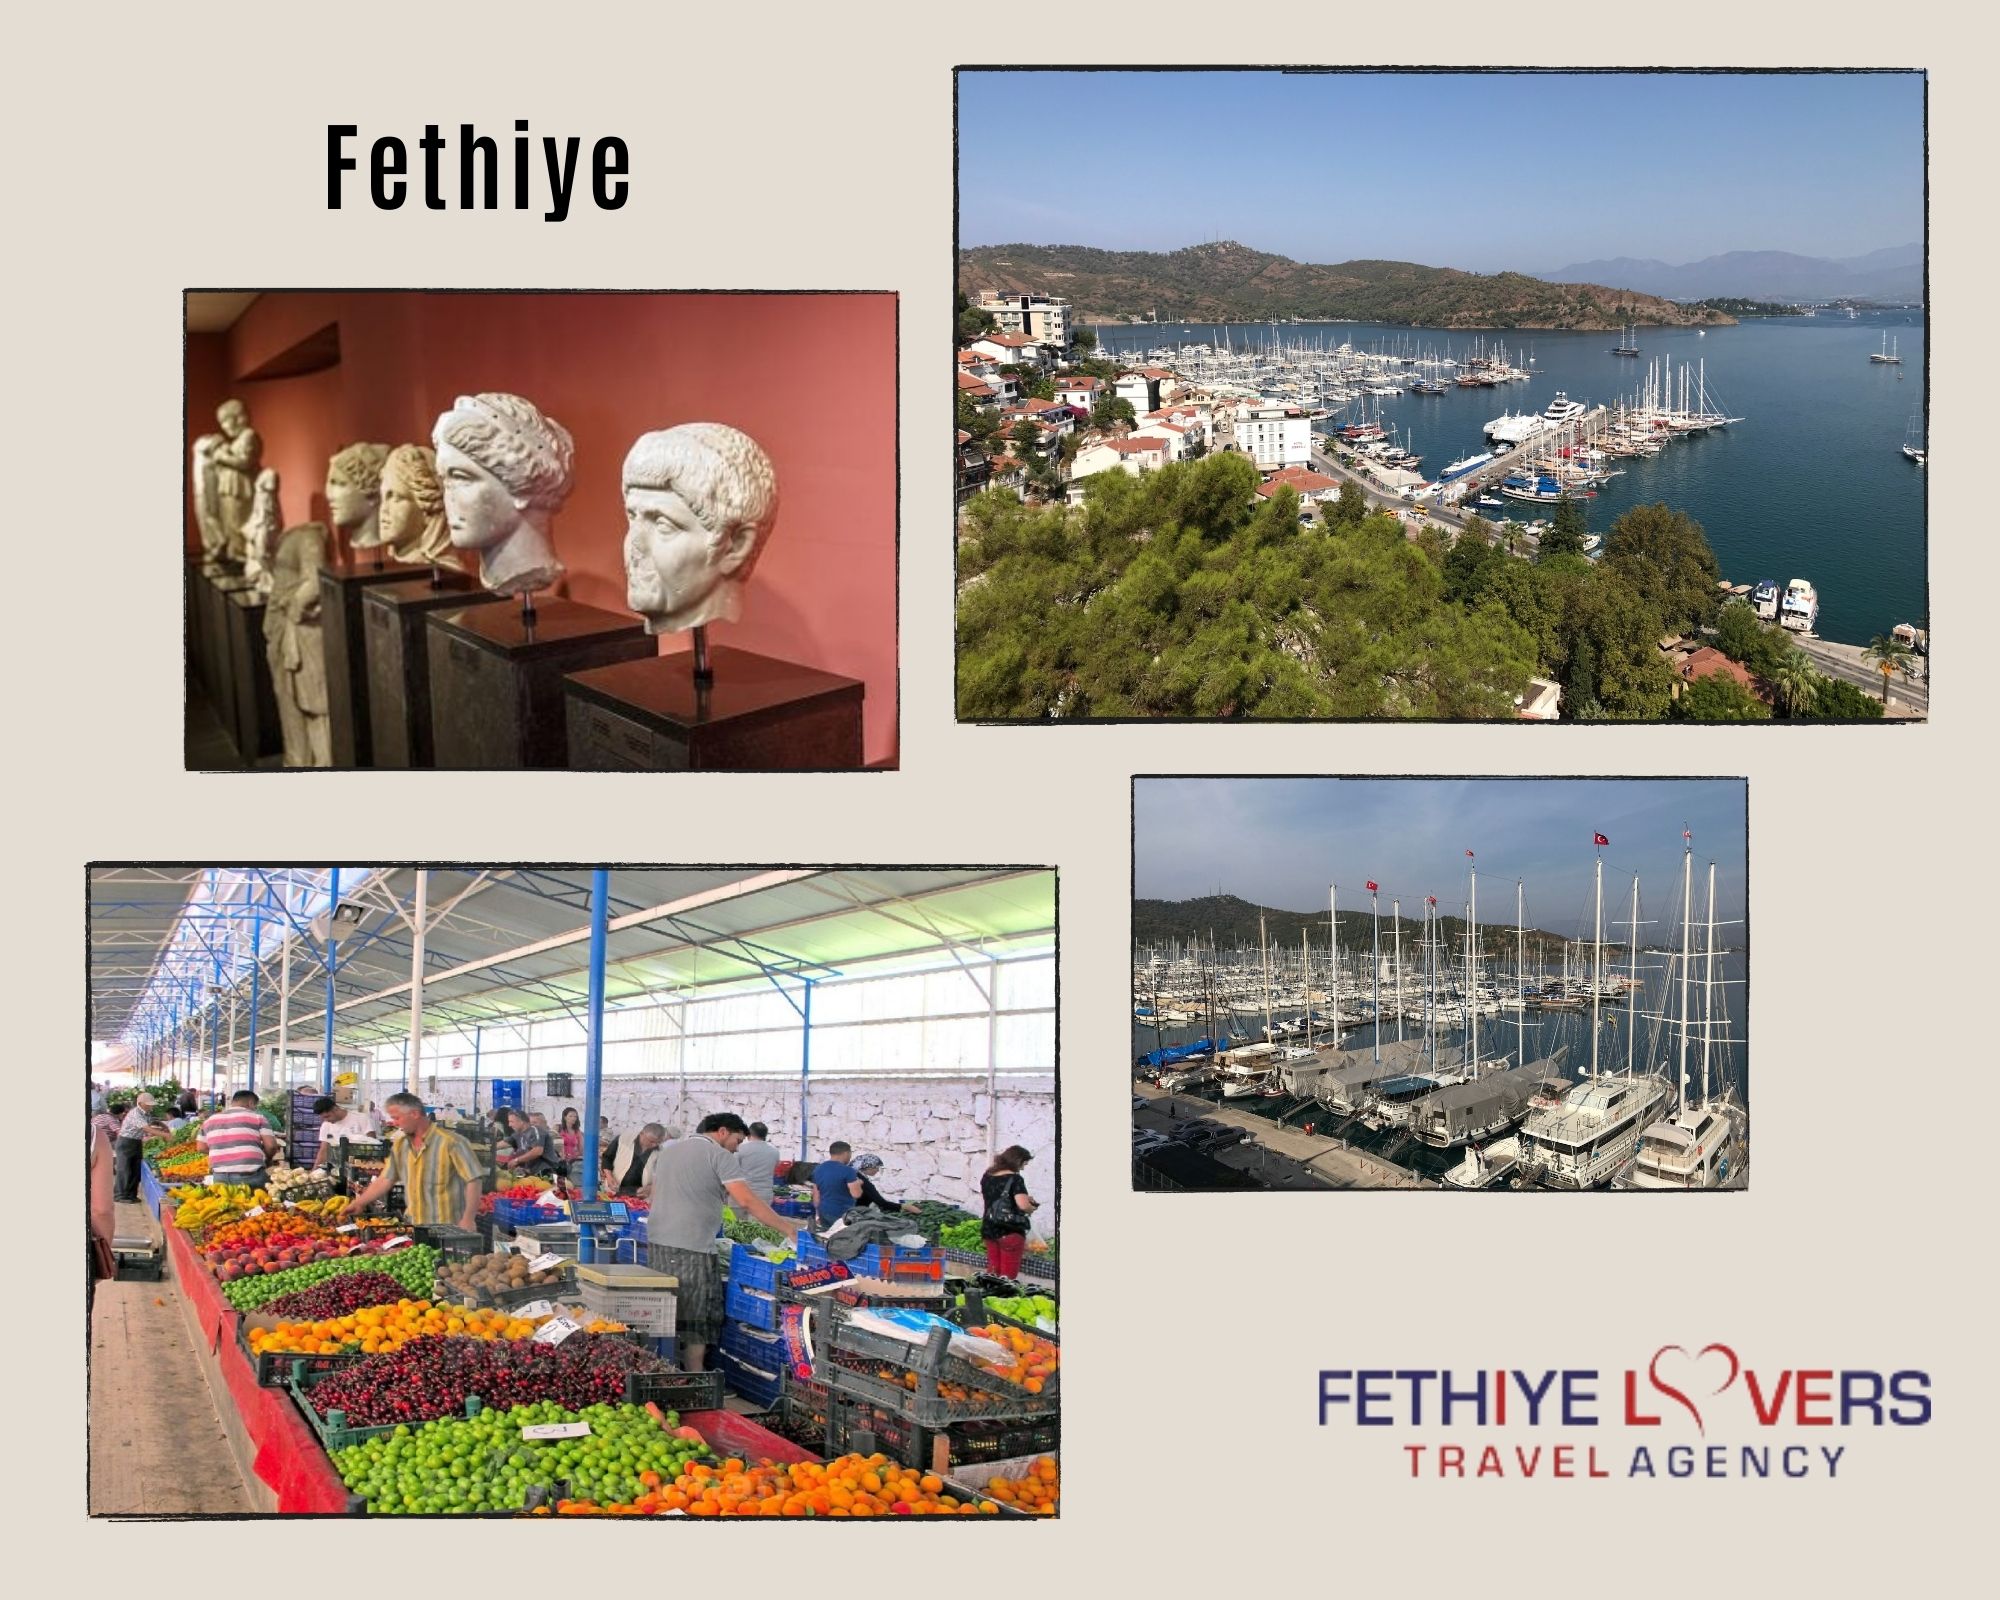 fethiye lovers travel agency